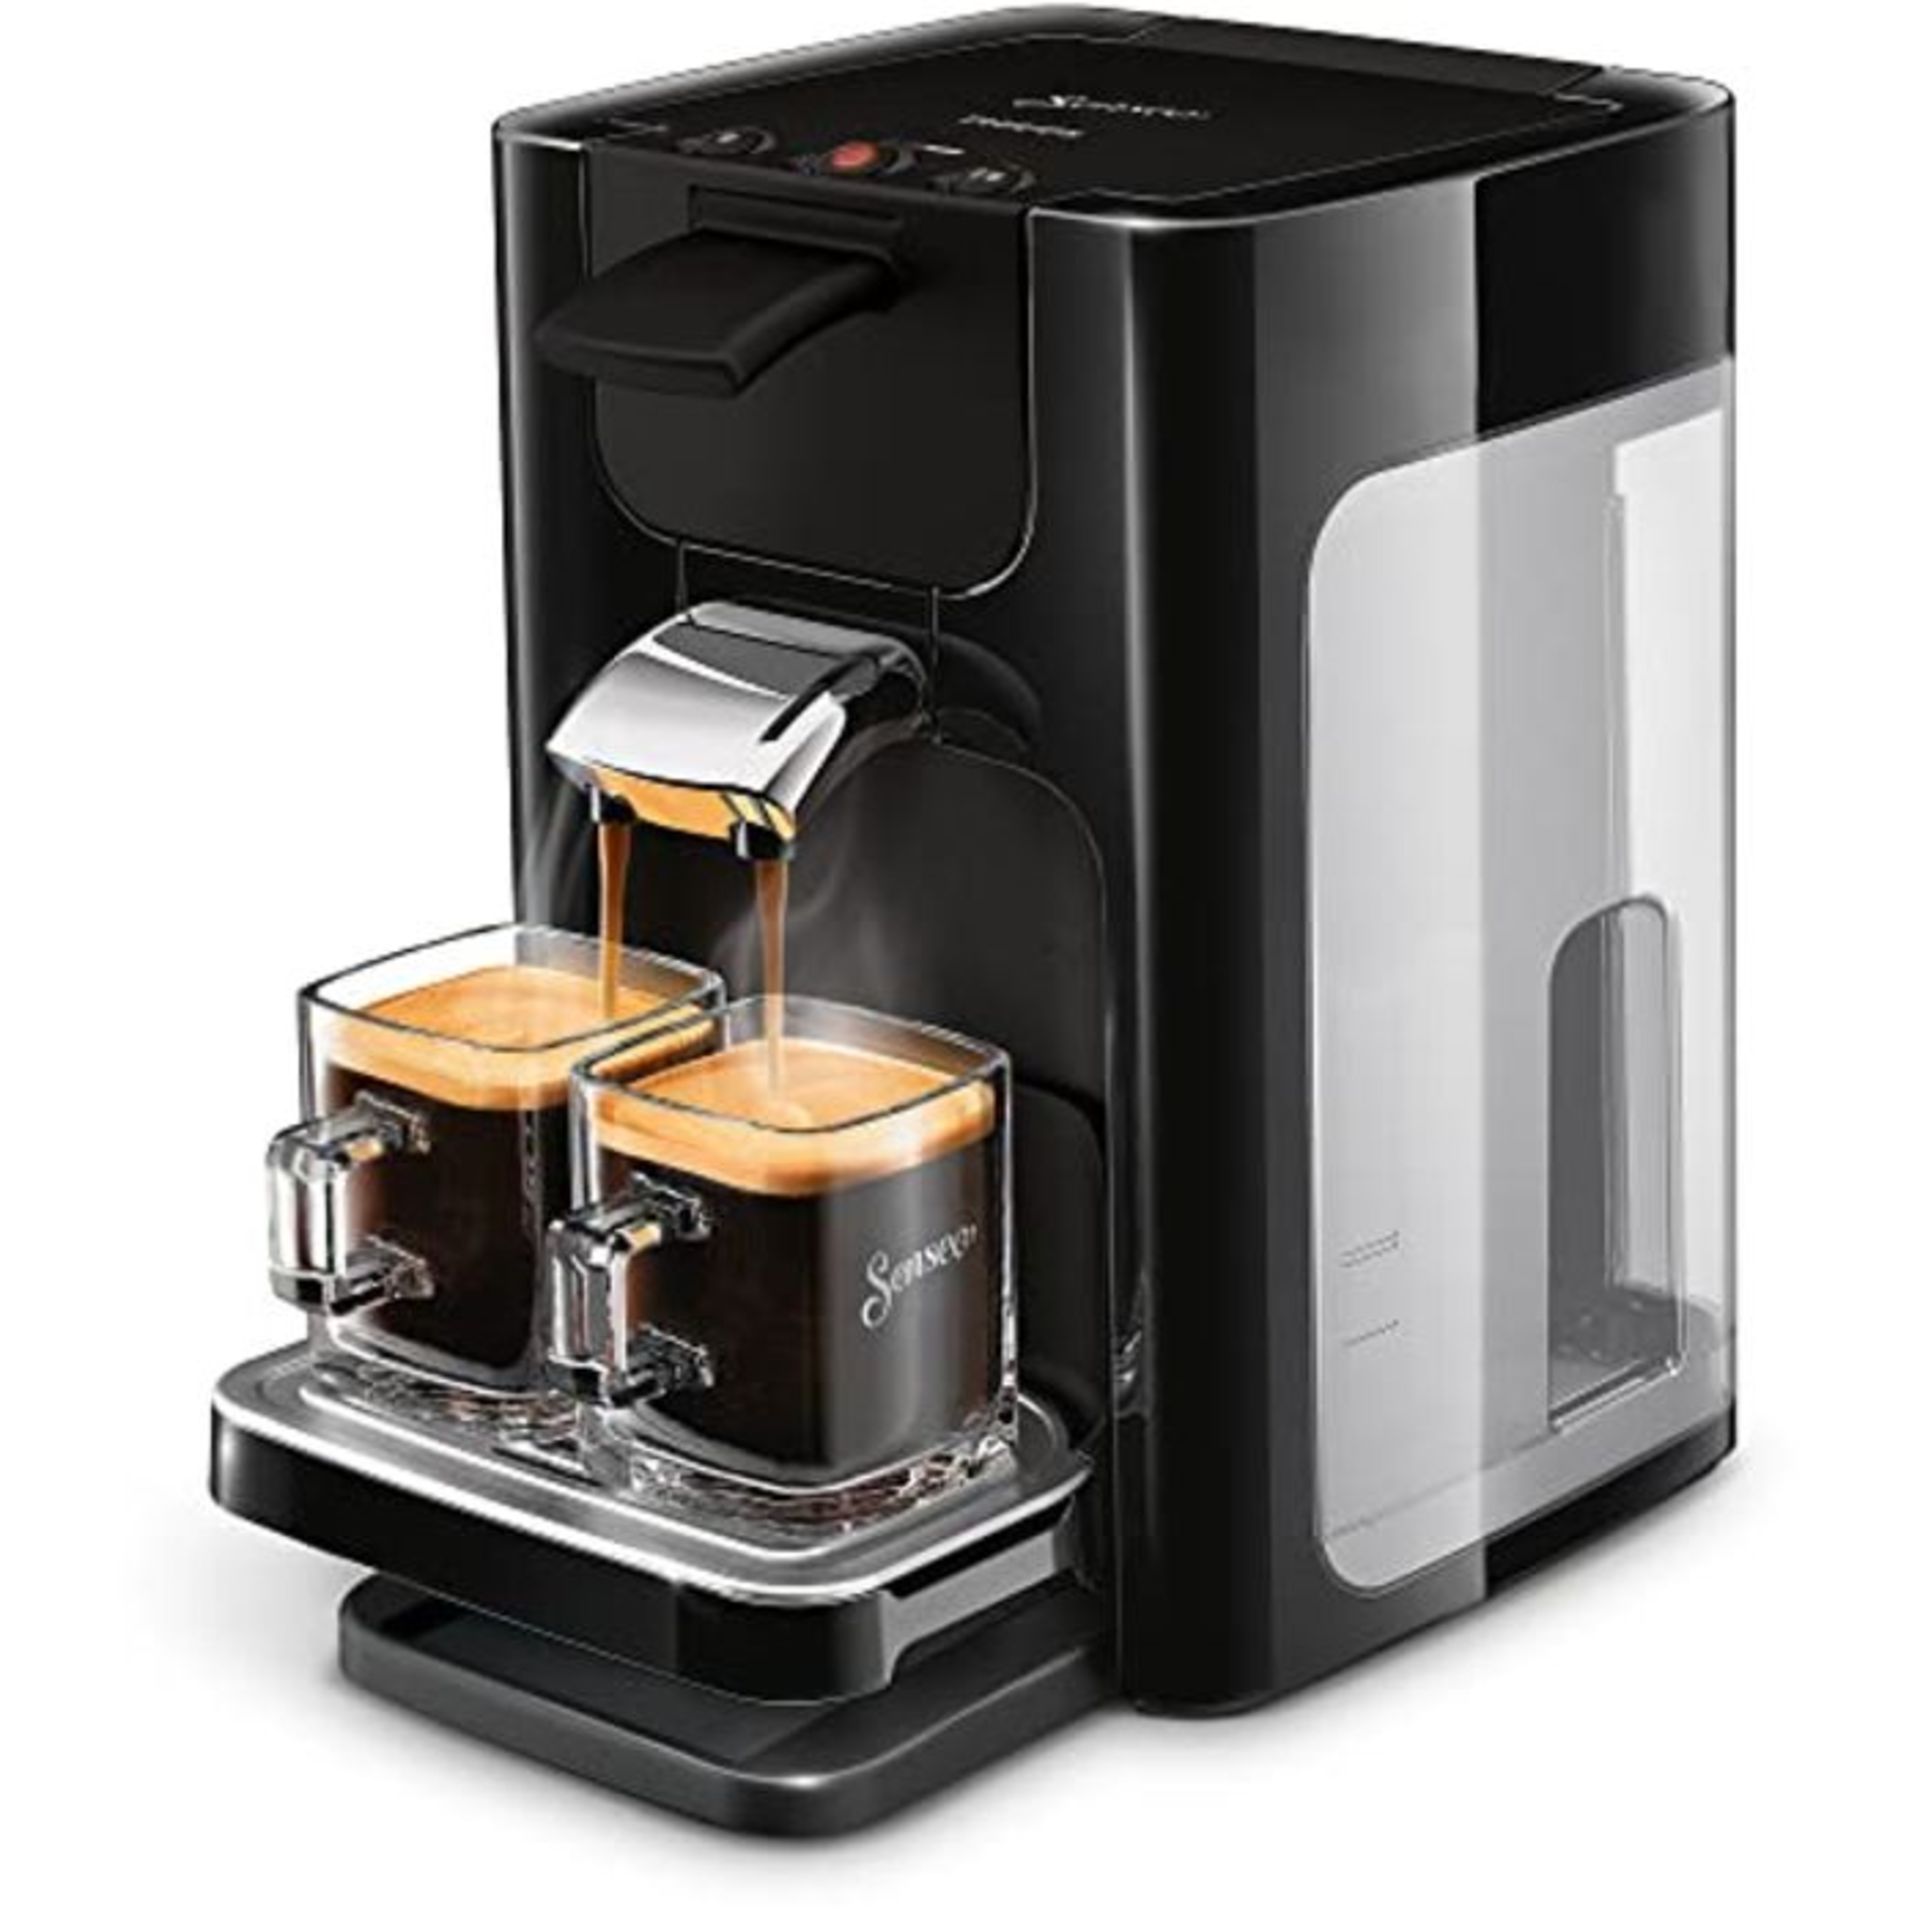 RRP £85.00 Senseo Quadrante hd7865/60 Coffee Machine in Capsules 1.2L 8 Cups Black - Coffee (